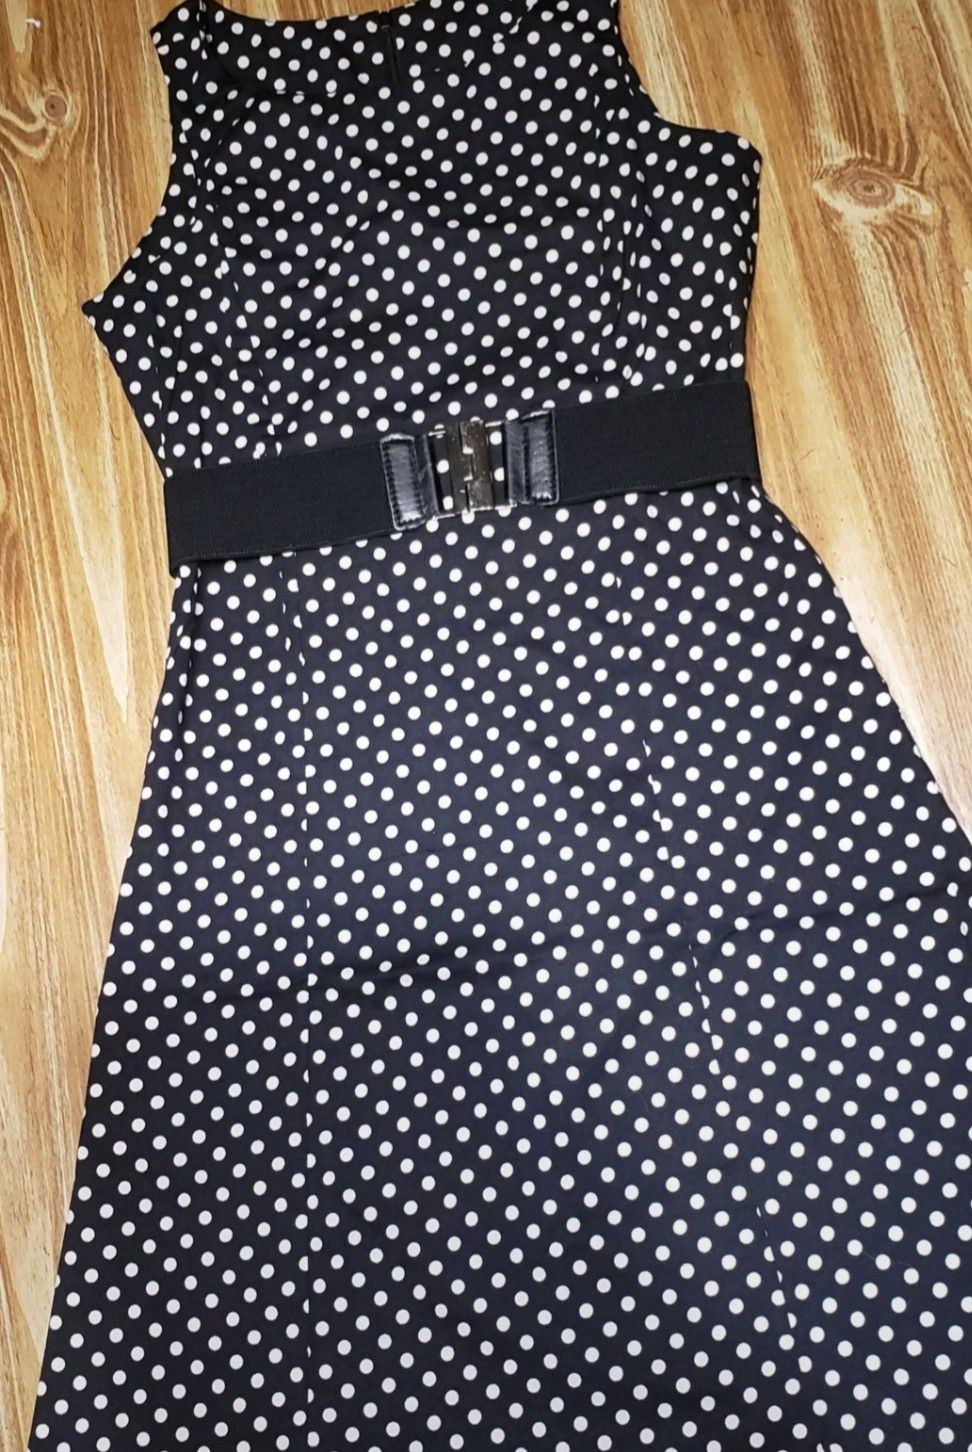 Cute polka dot mid length XL dress